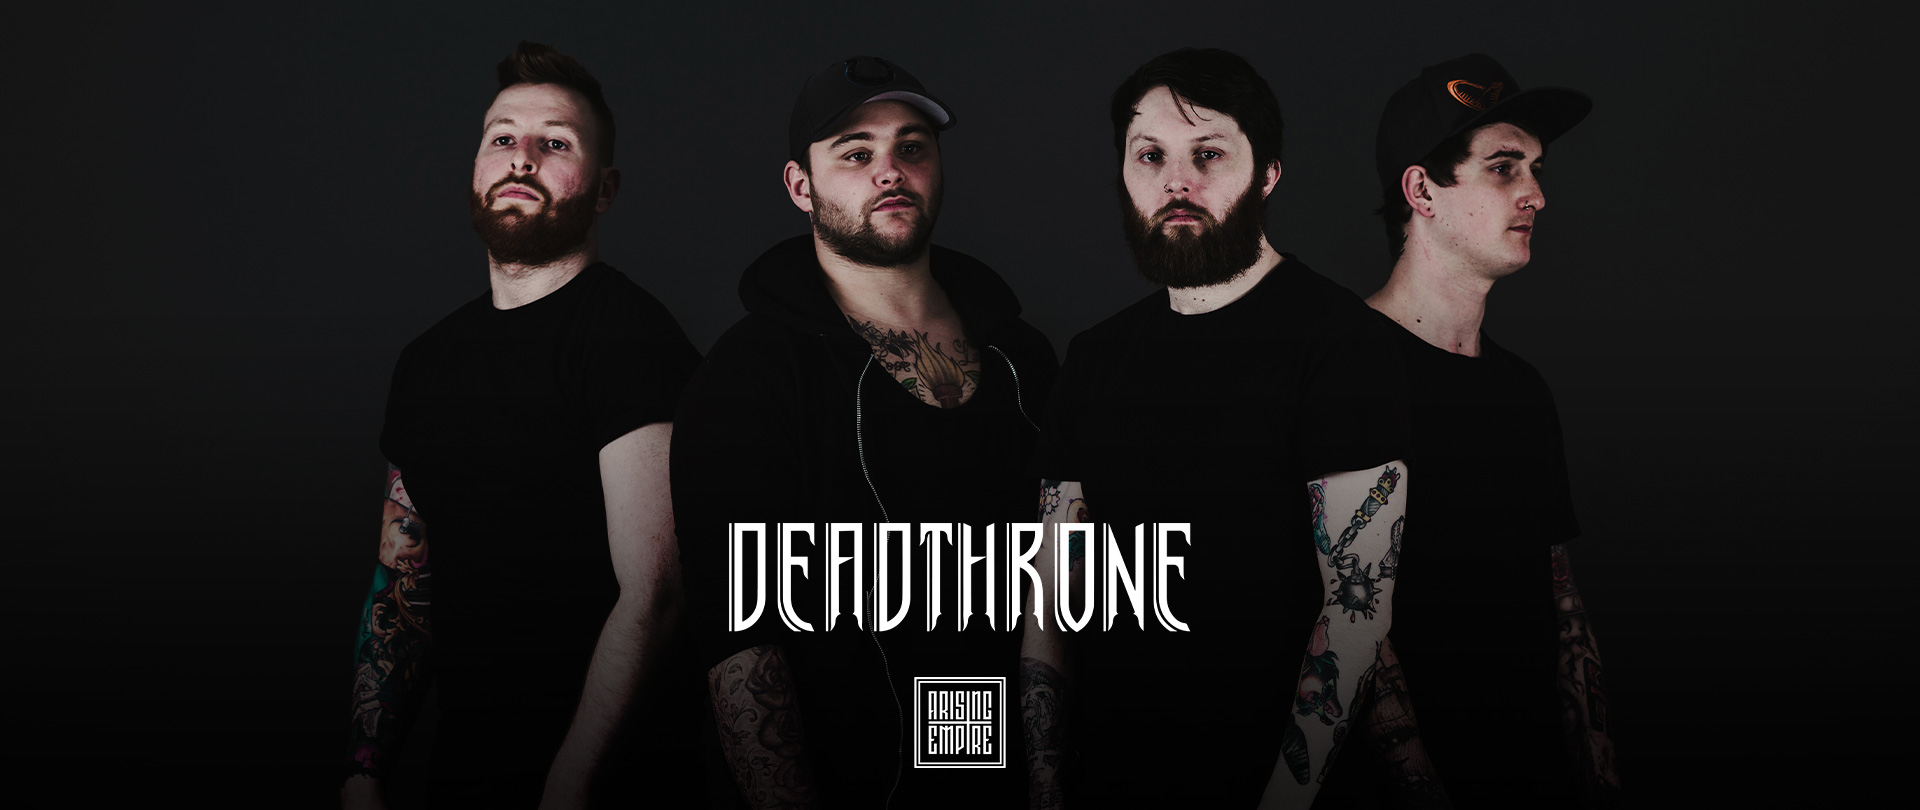 Deadthrone at Arising Empire • Official Online Shop / EN